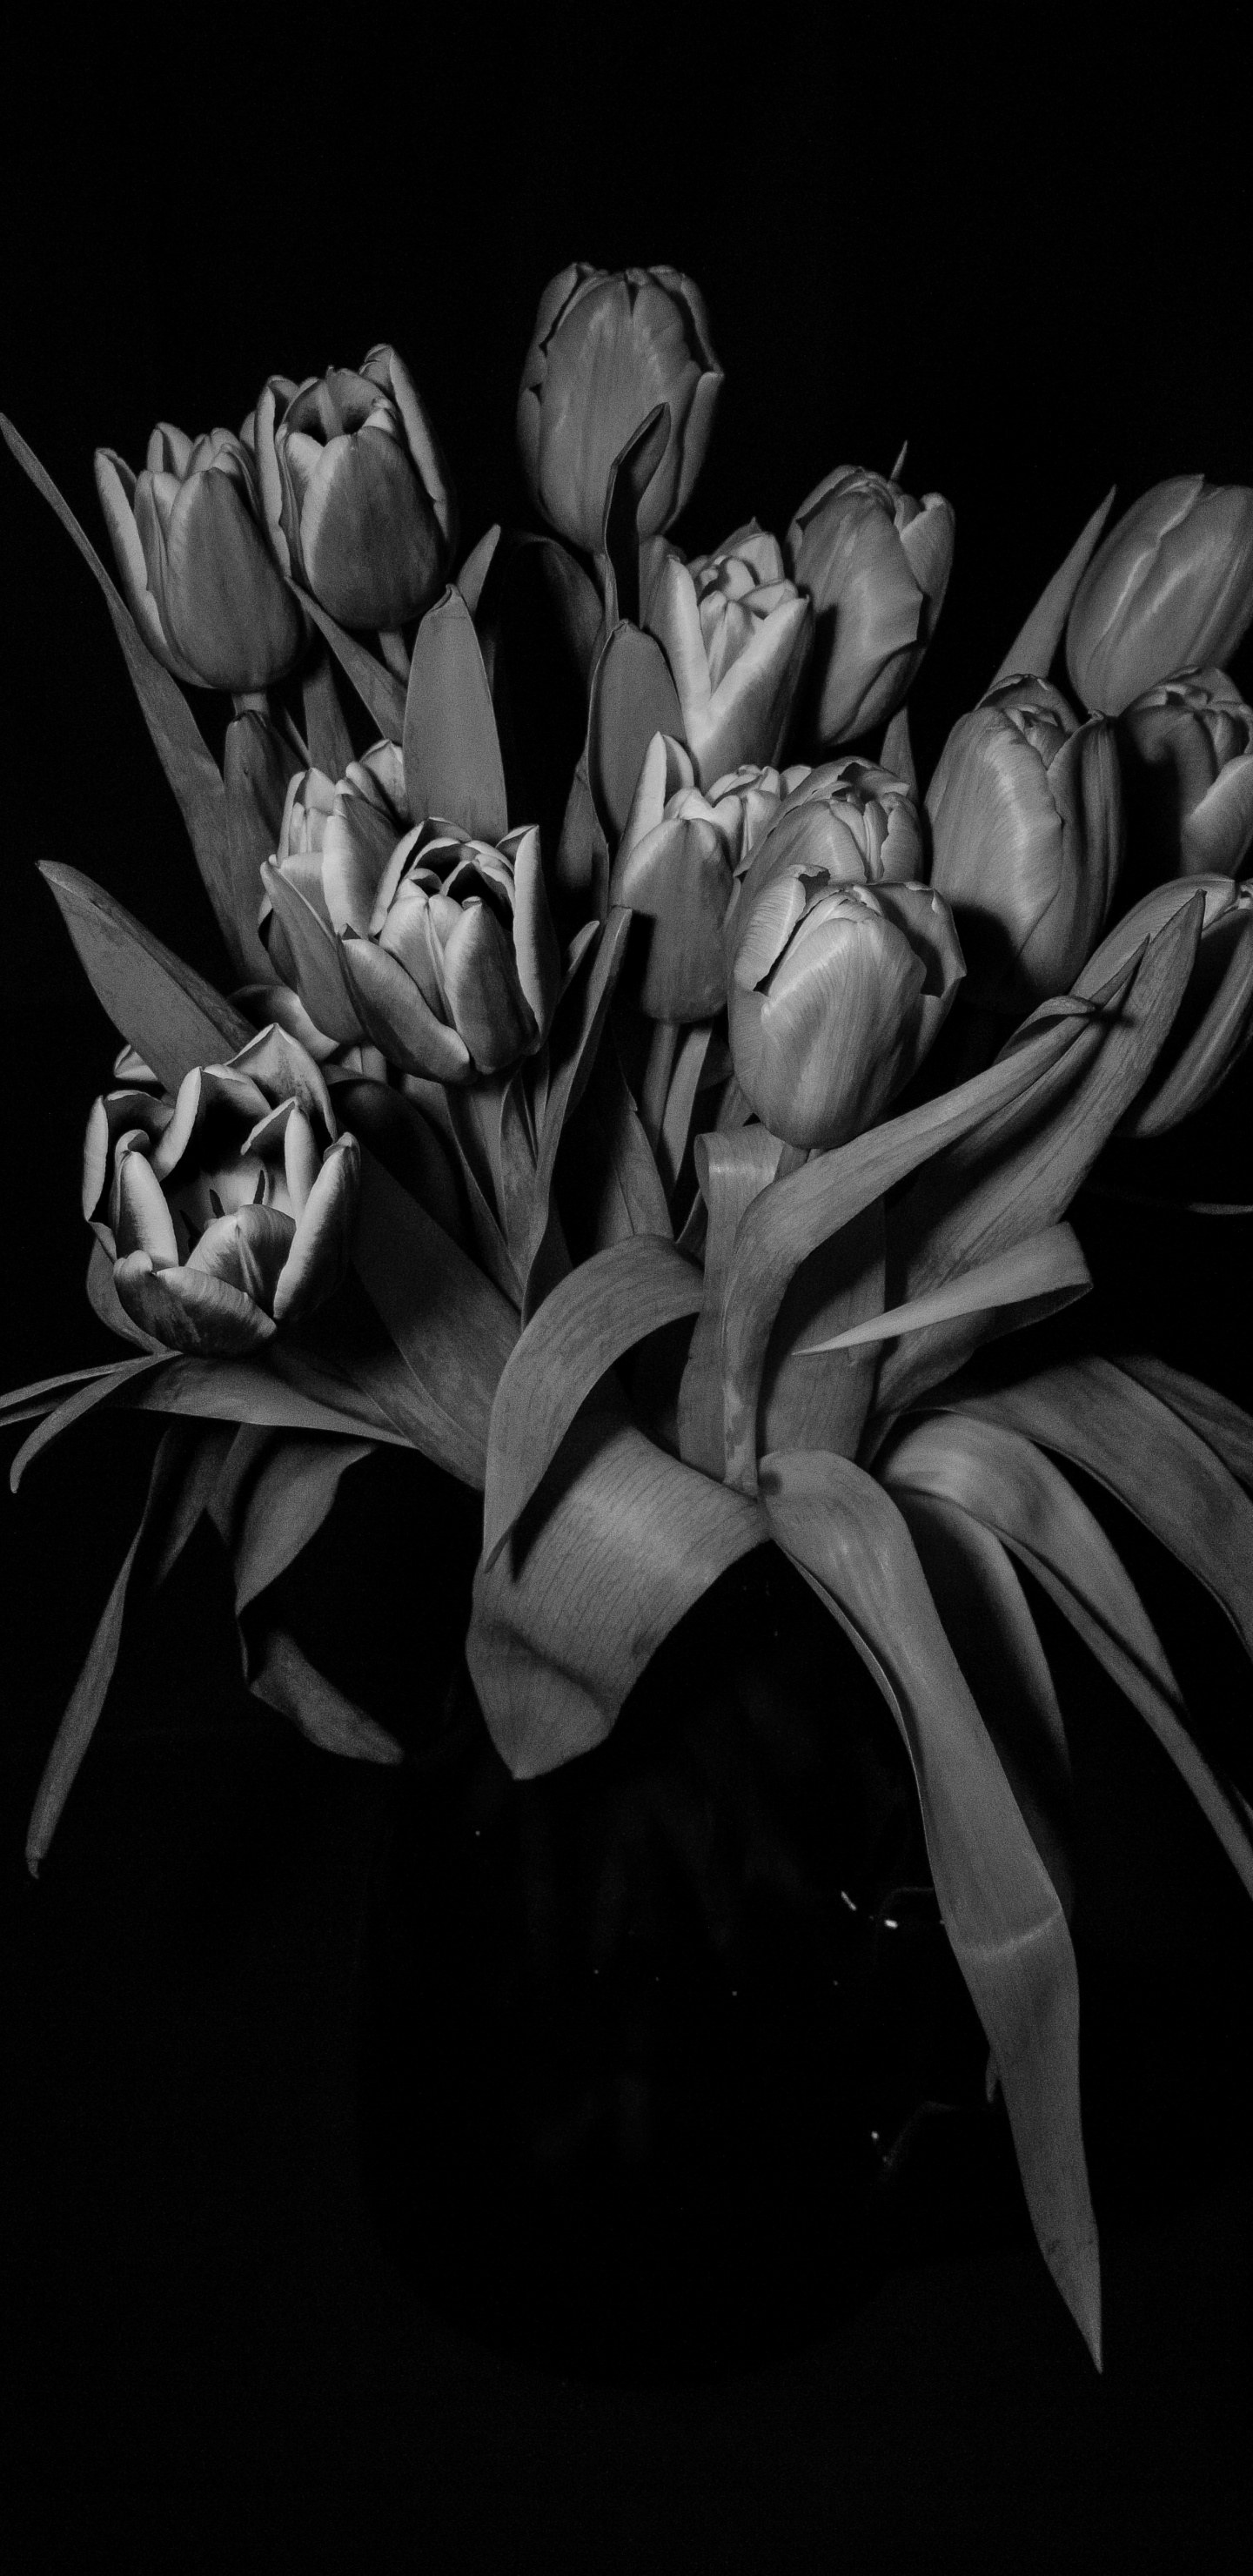 Photo en Niveaux de Gris de Tulipes en Fleurs. Wallpaper in 1440x2960 Resolution